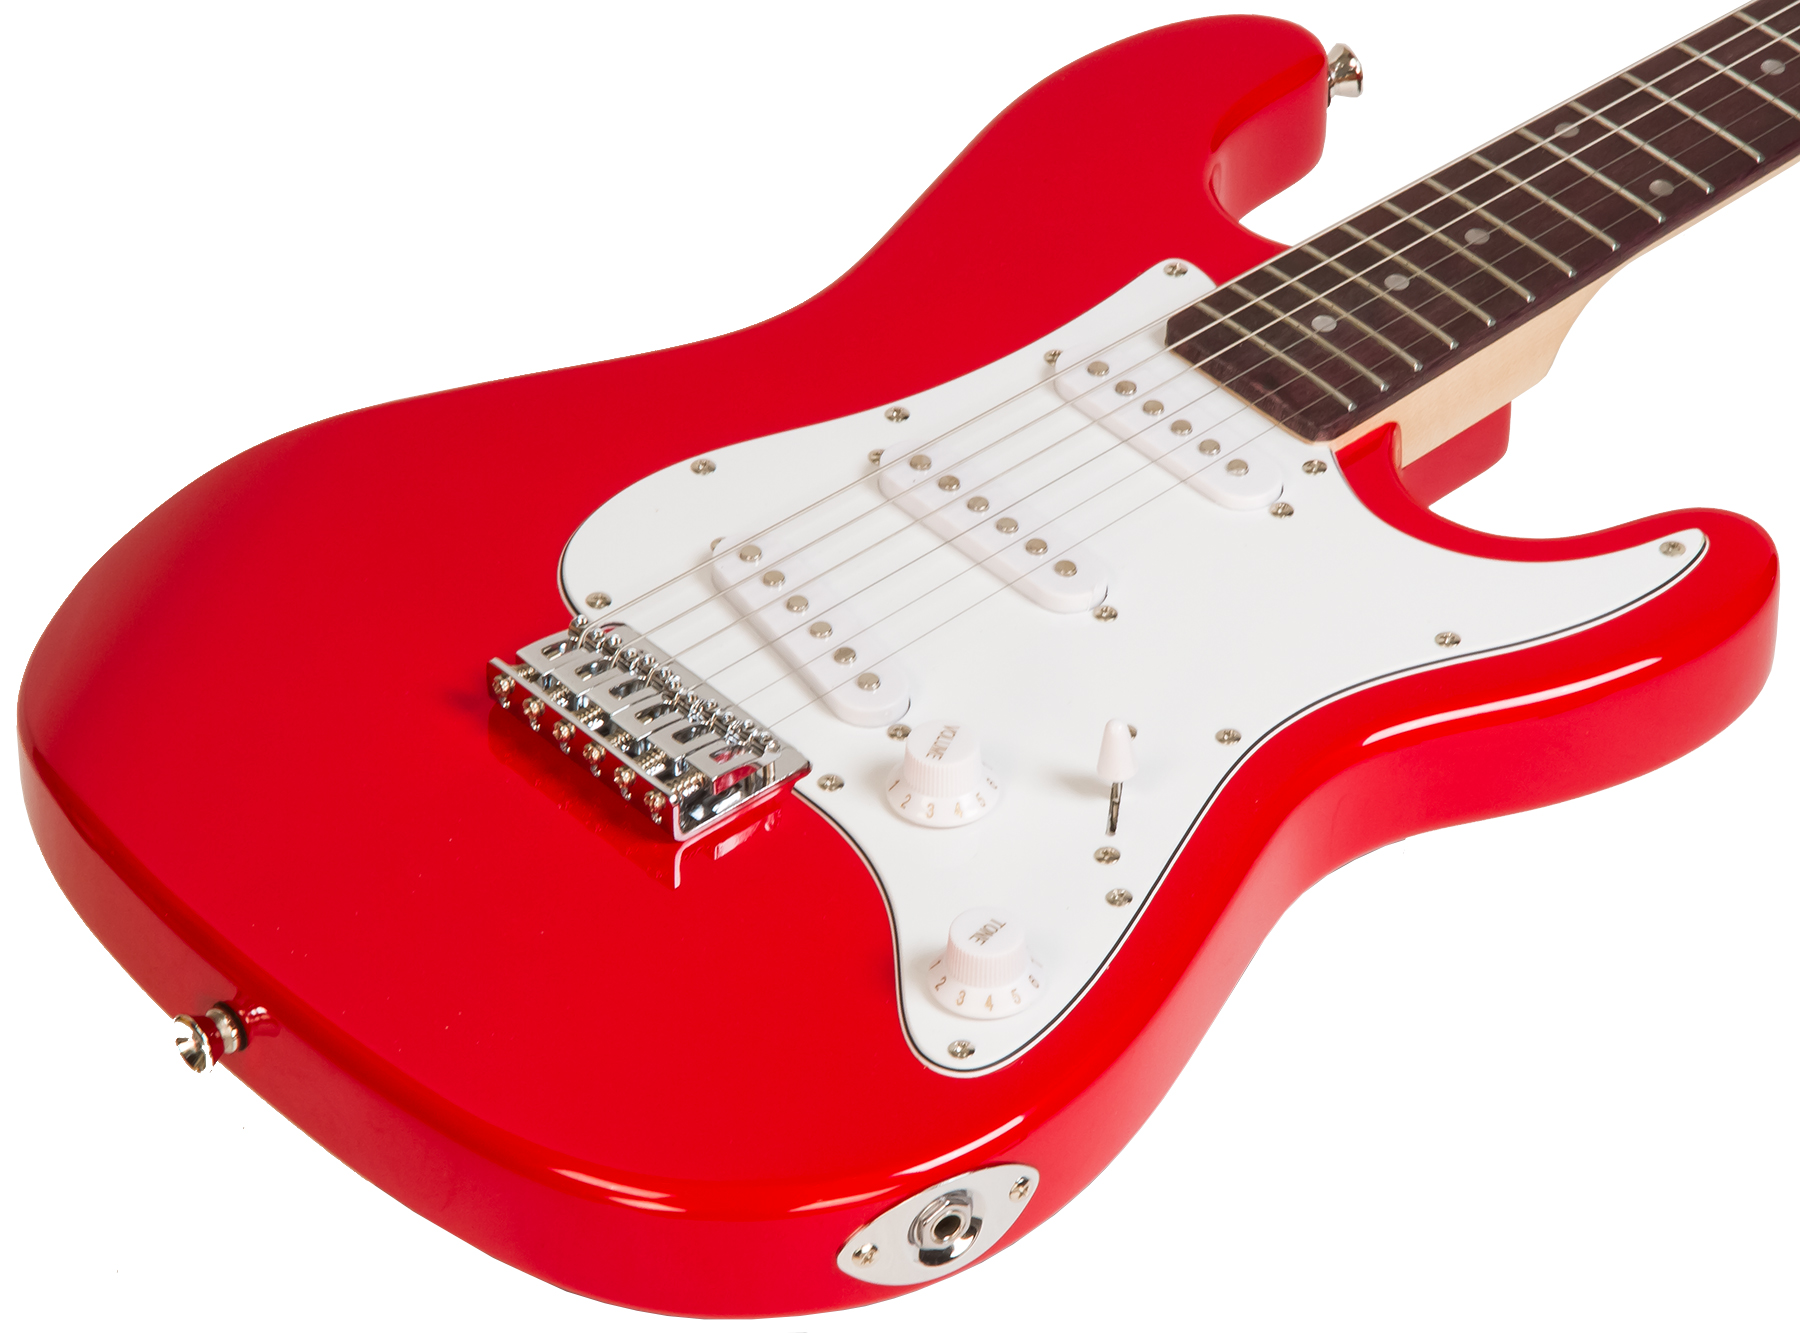 Eastone Str Mini Sss Ht Pur - Red - Electric guitar for kids - Variation 1